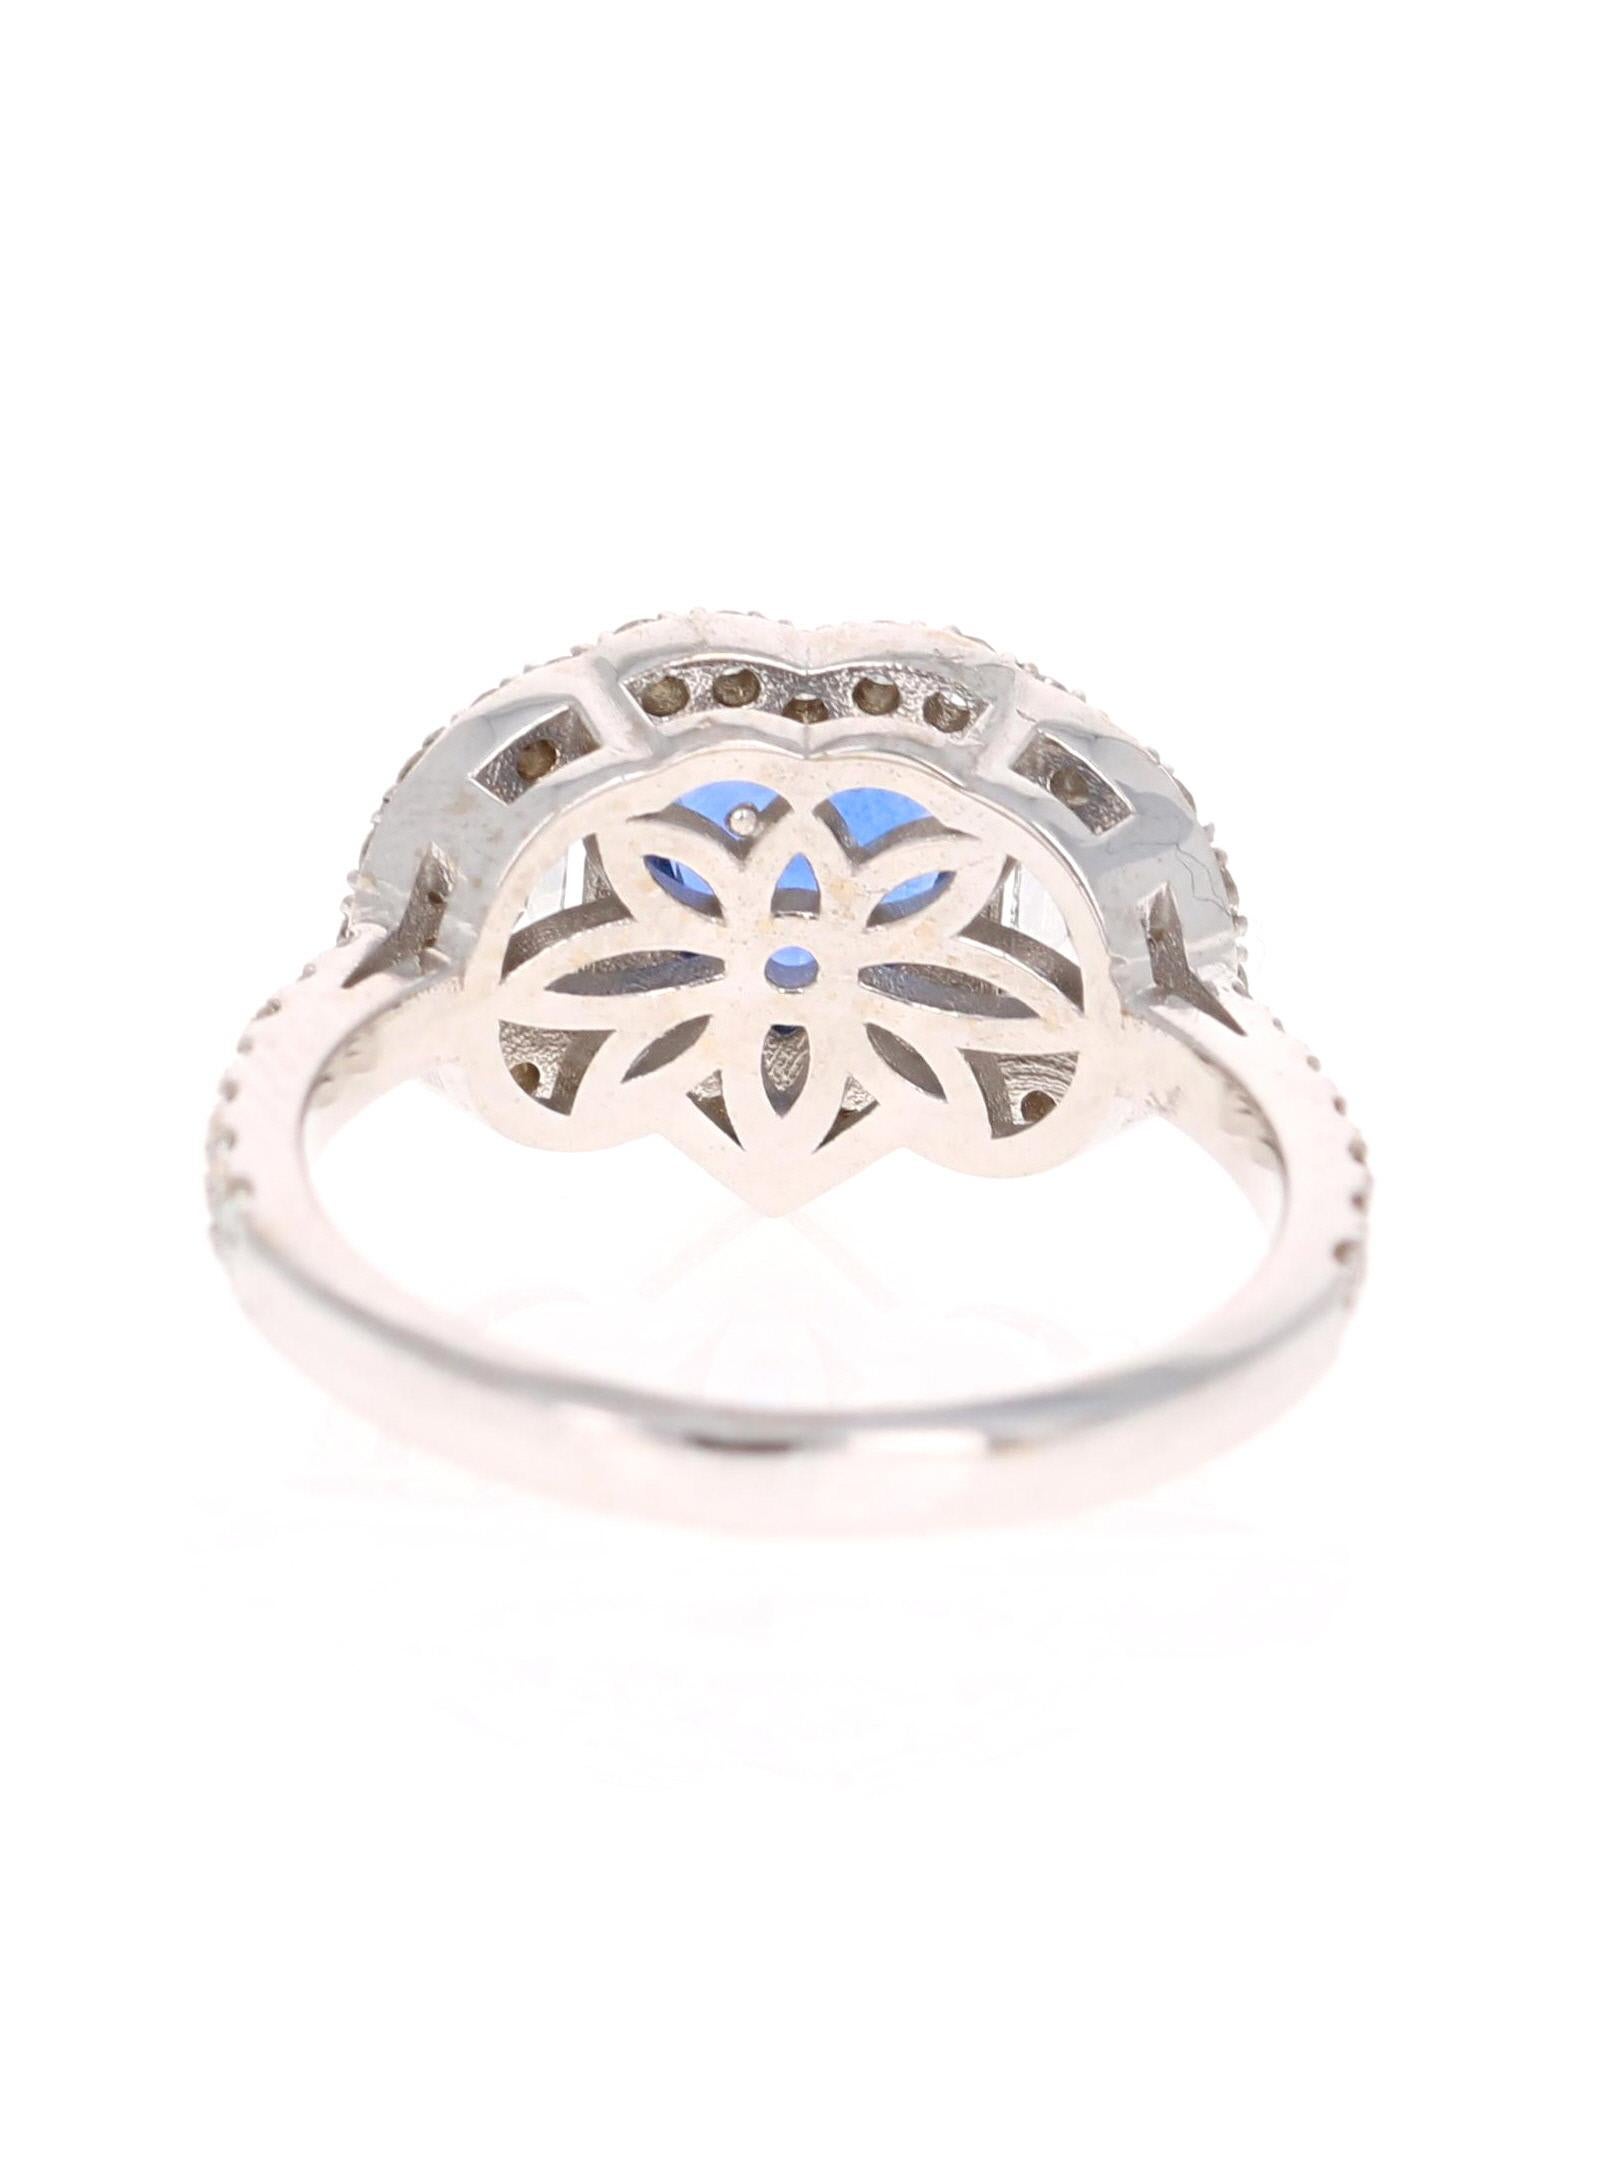 Heart Cut 3.06 Carat GIA Certified Sapphire Diamond 18 Karat White Gold Ring For Sale